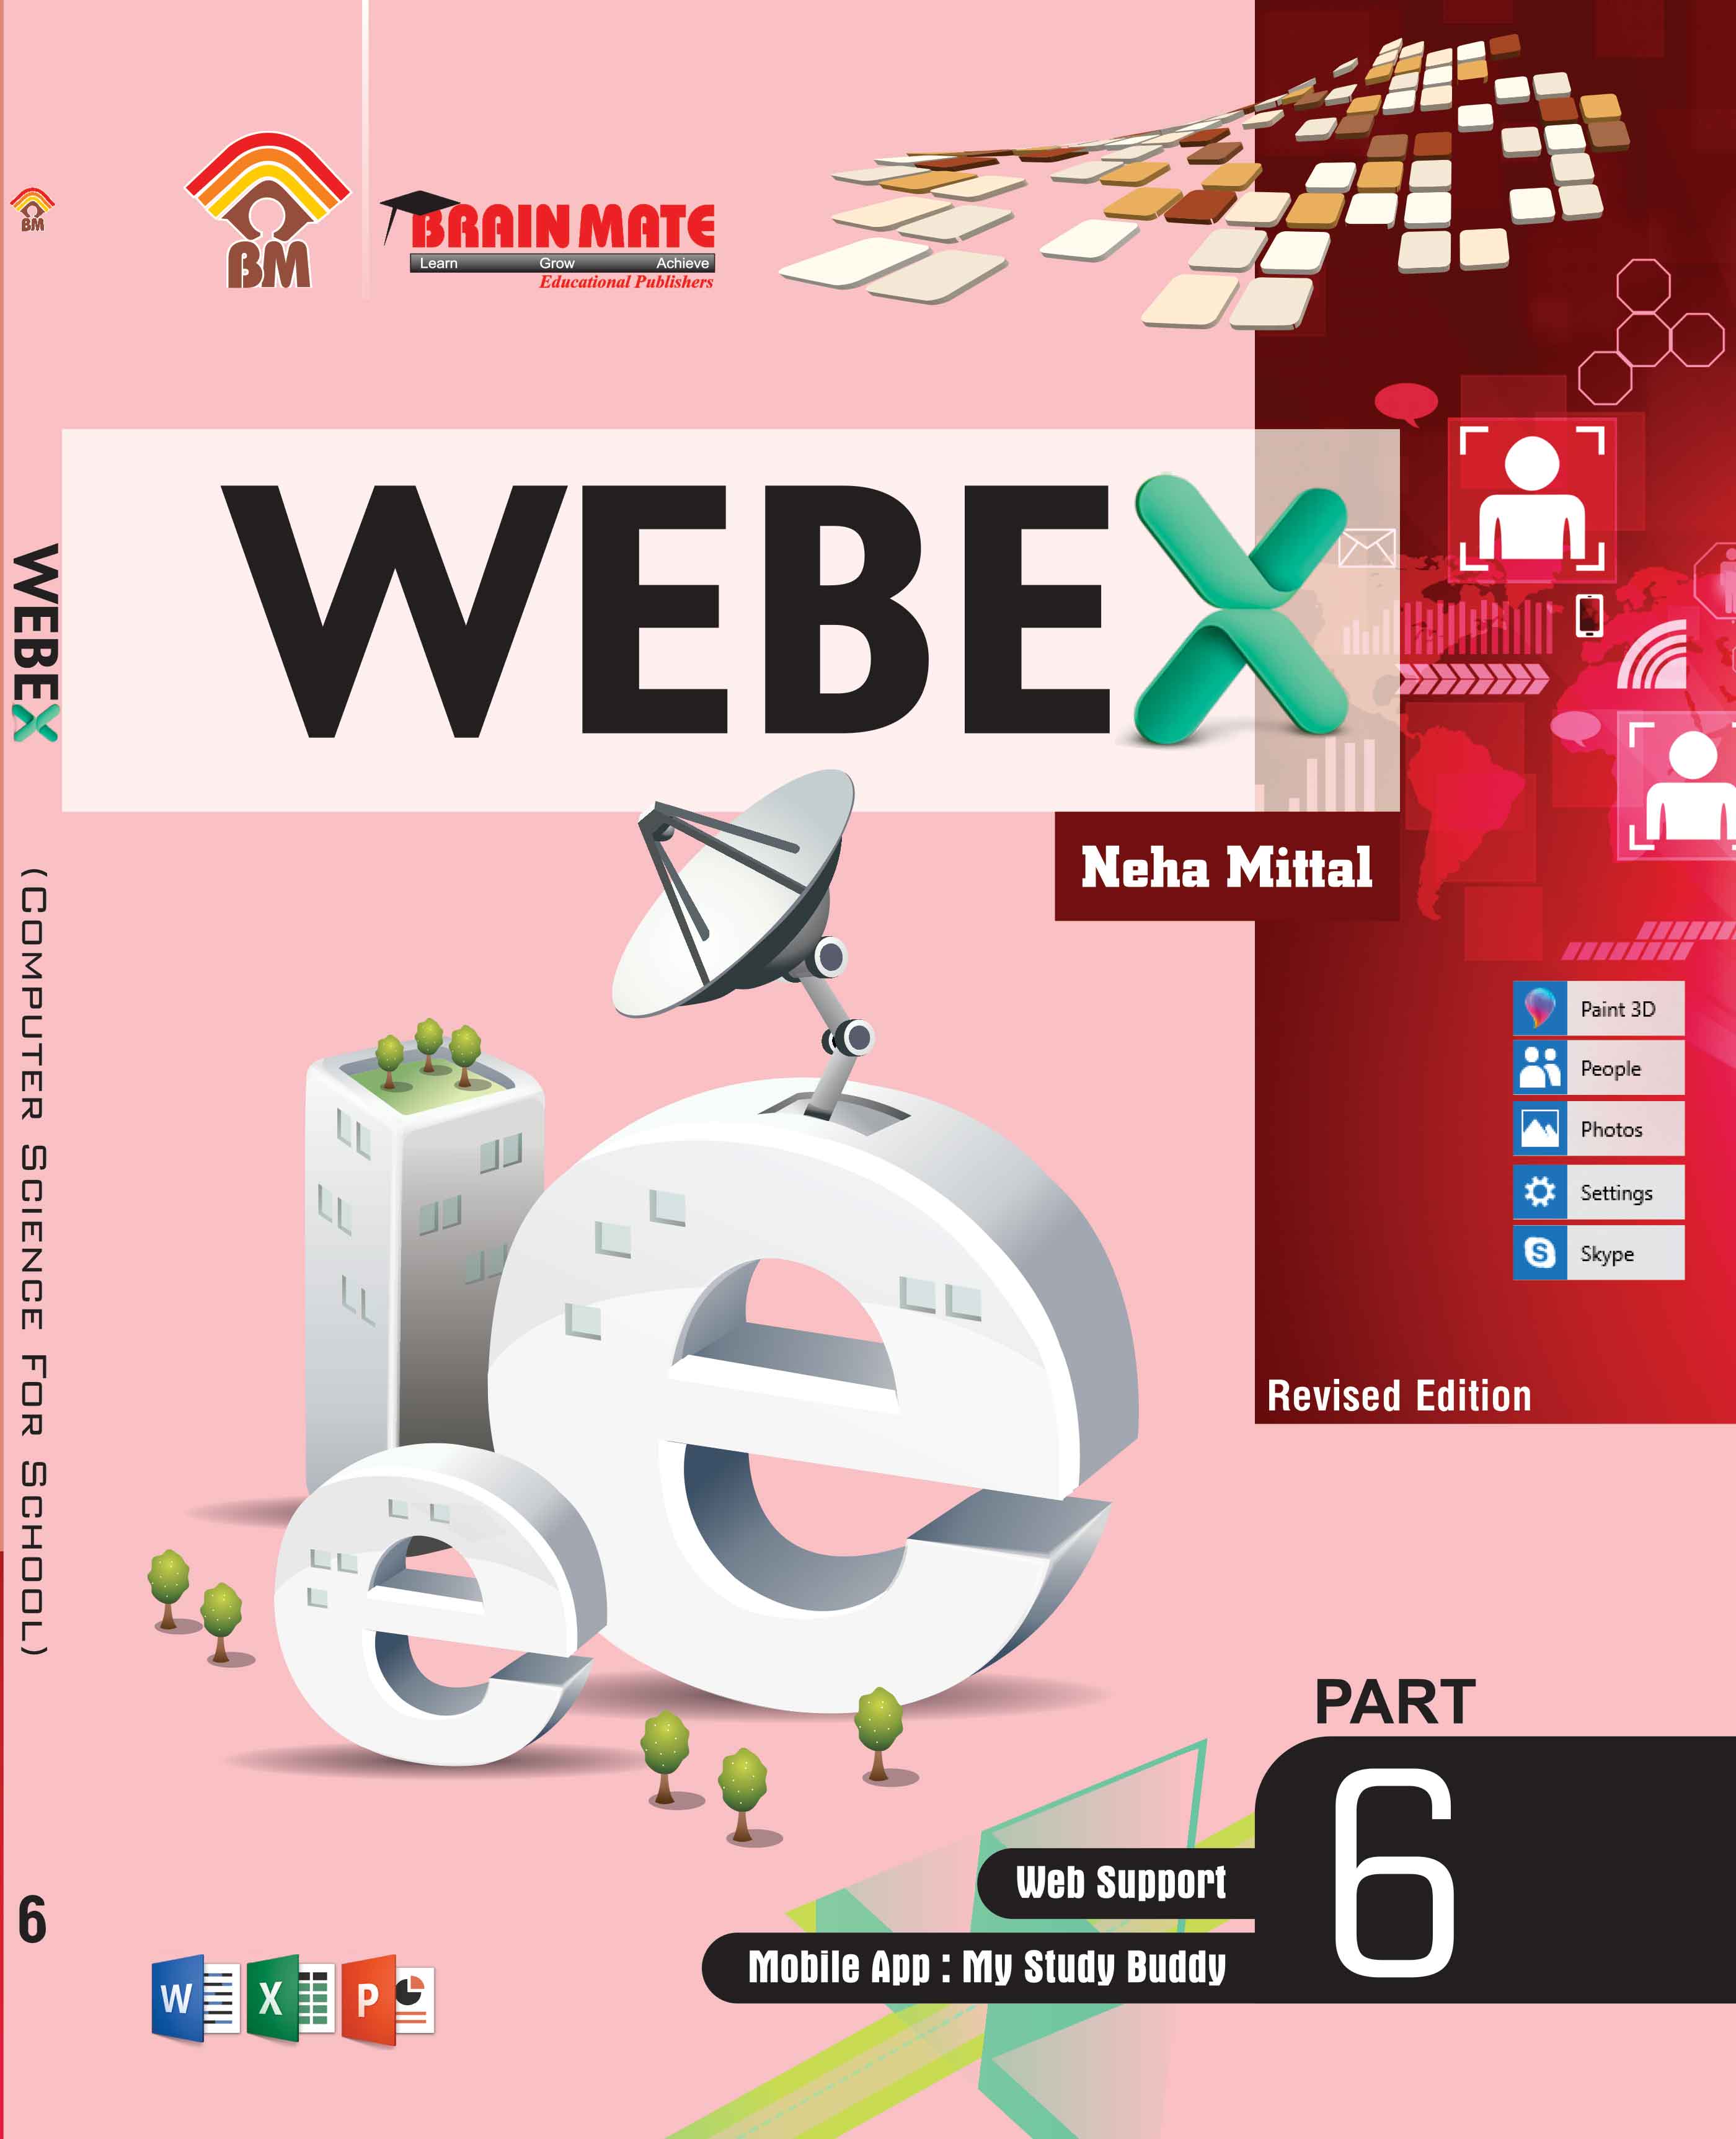 brainmate of Webex-6